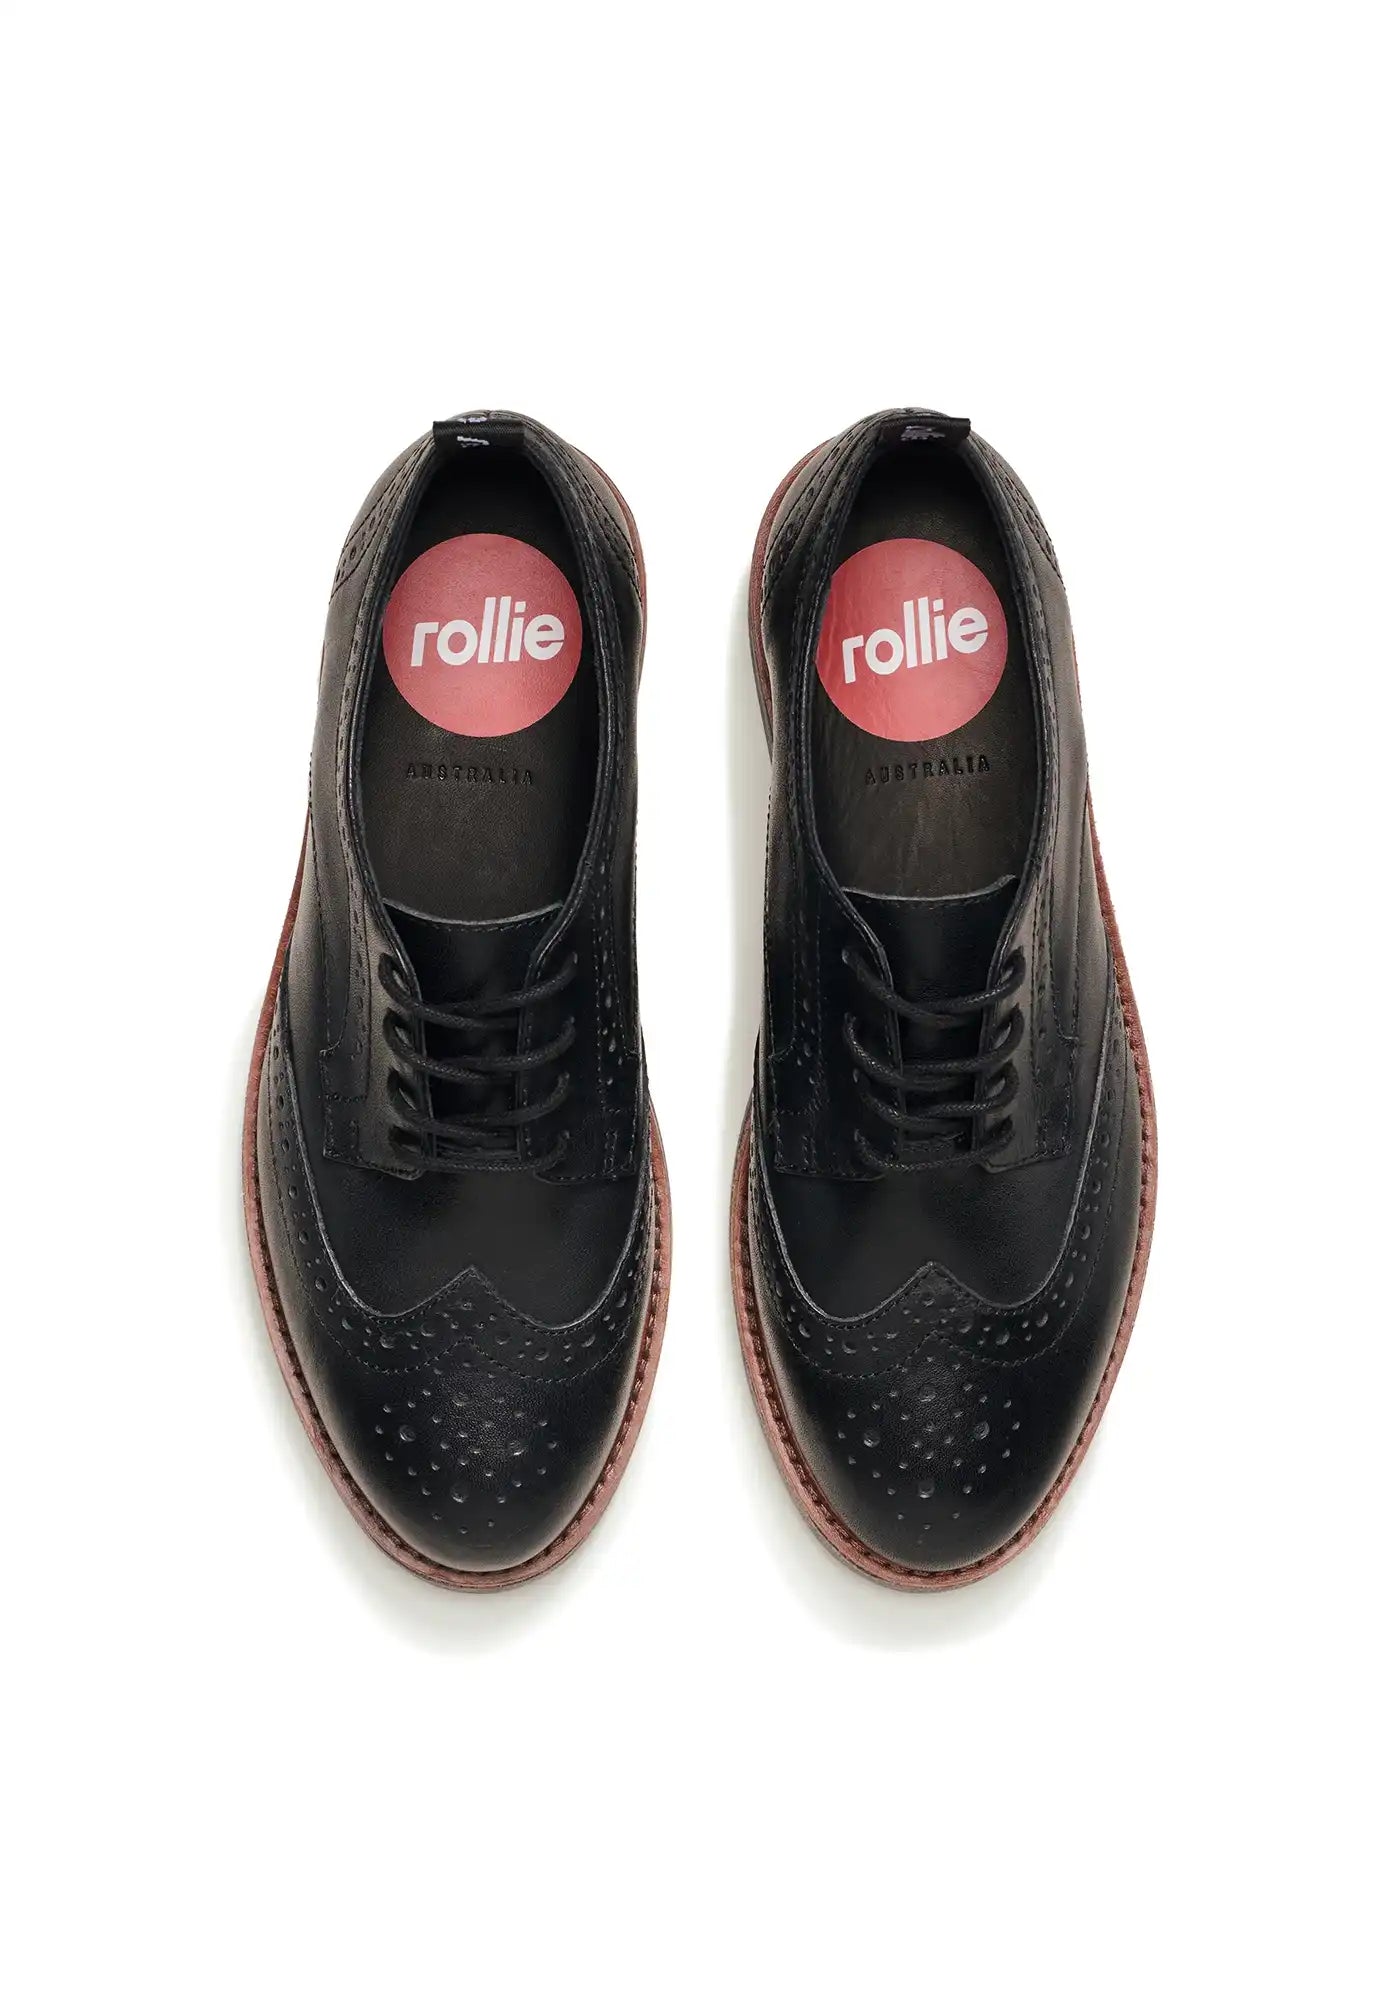 rollie - brogue rise - vintage black